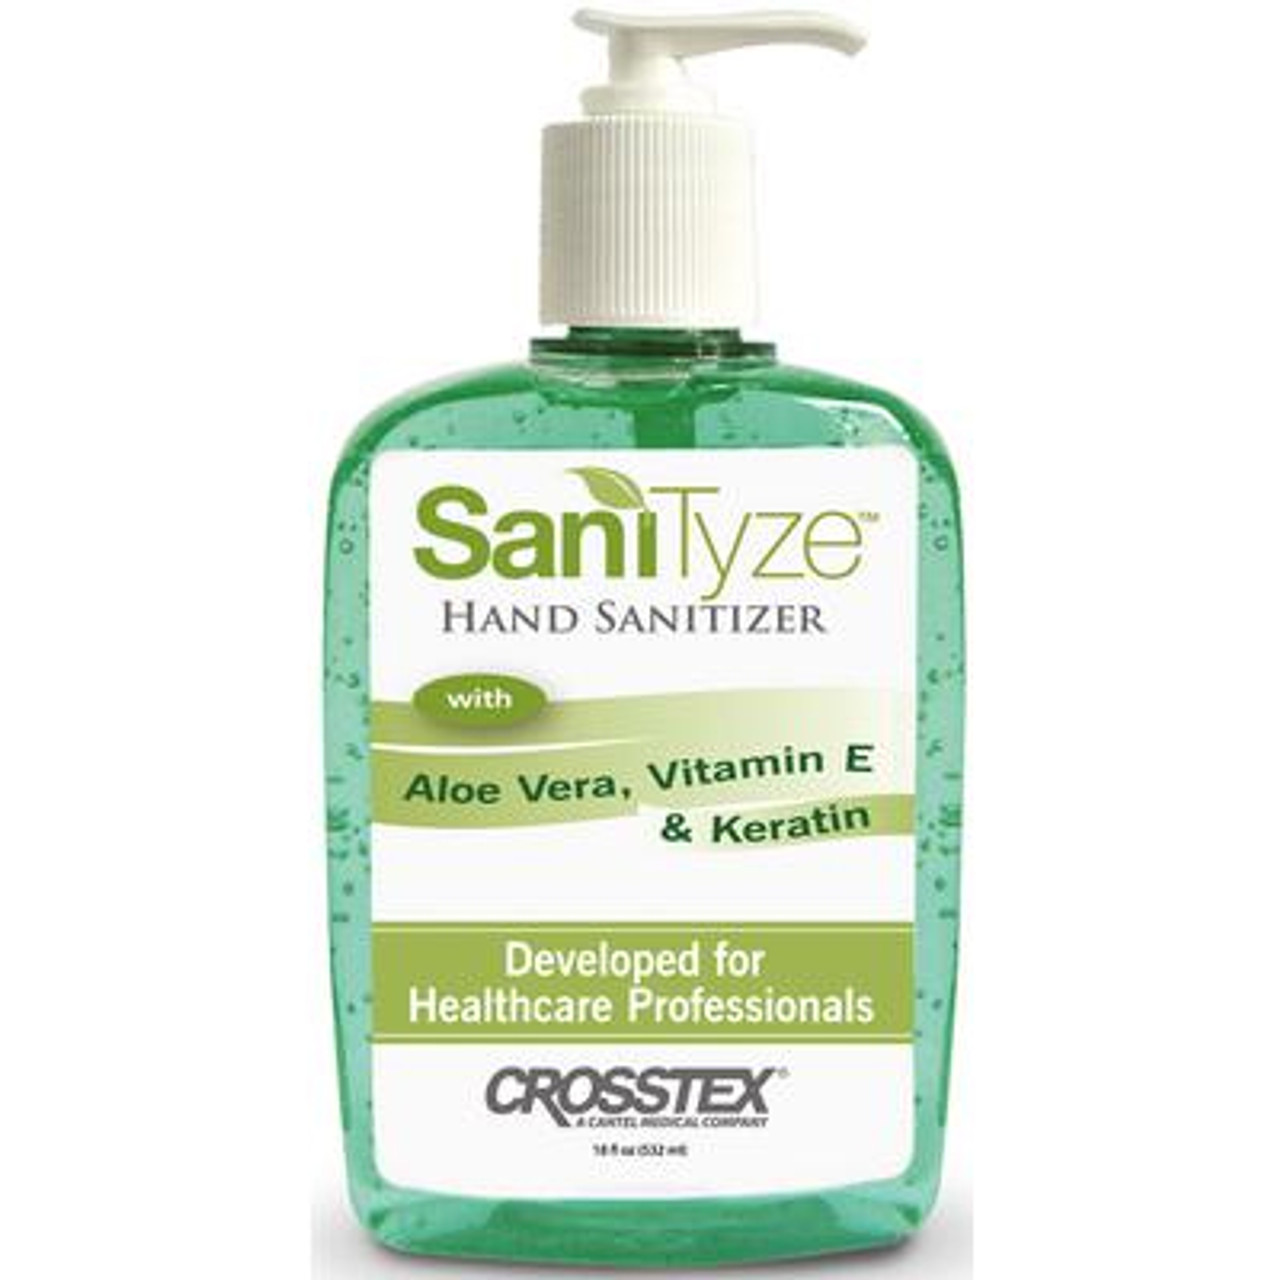 SaniTyze 70% Ethyl Alcohol Hand Sanitizer Gel 18oz Bottle